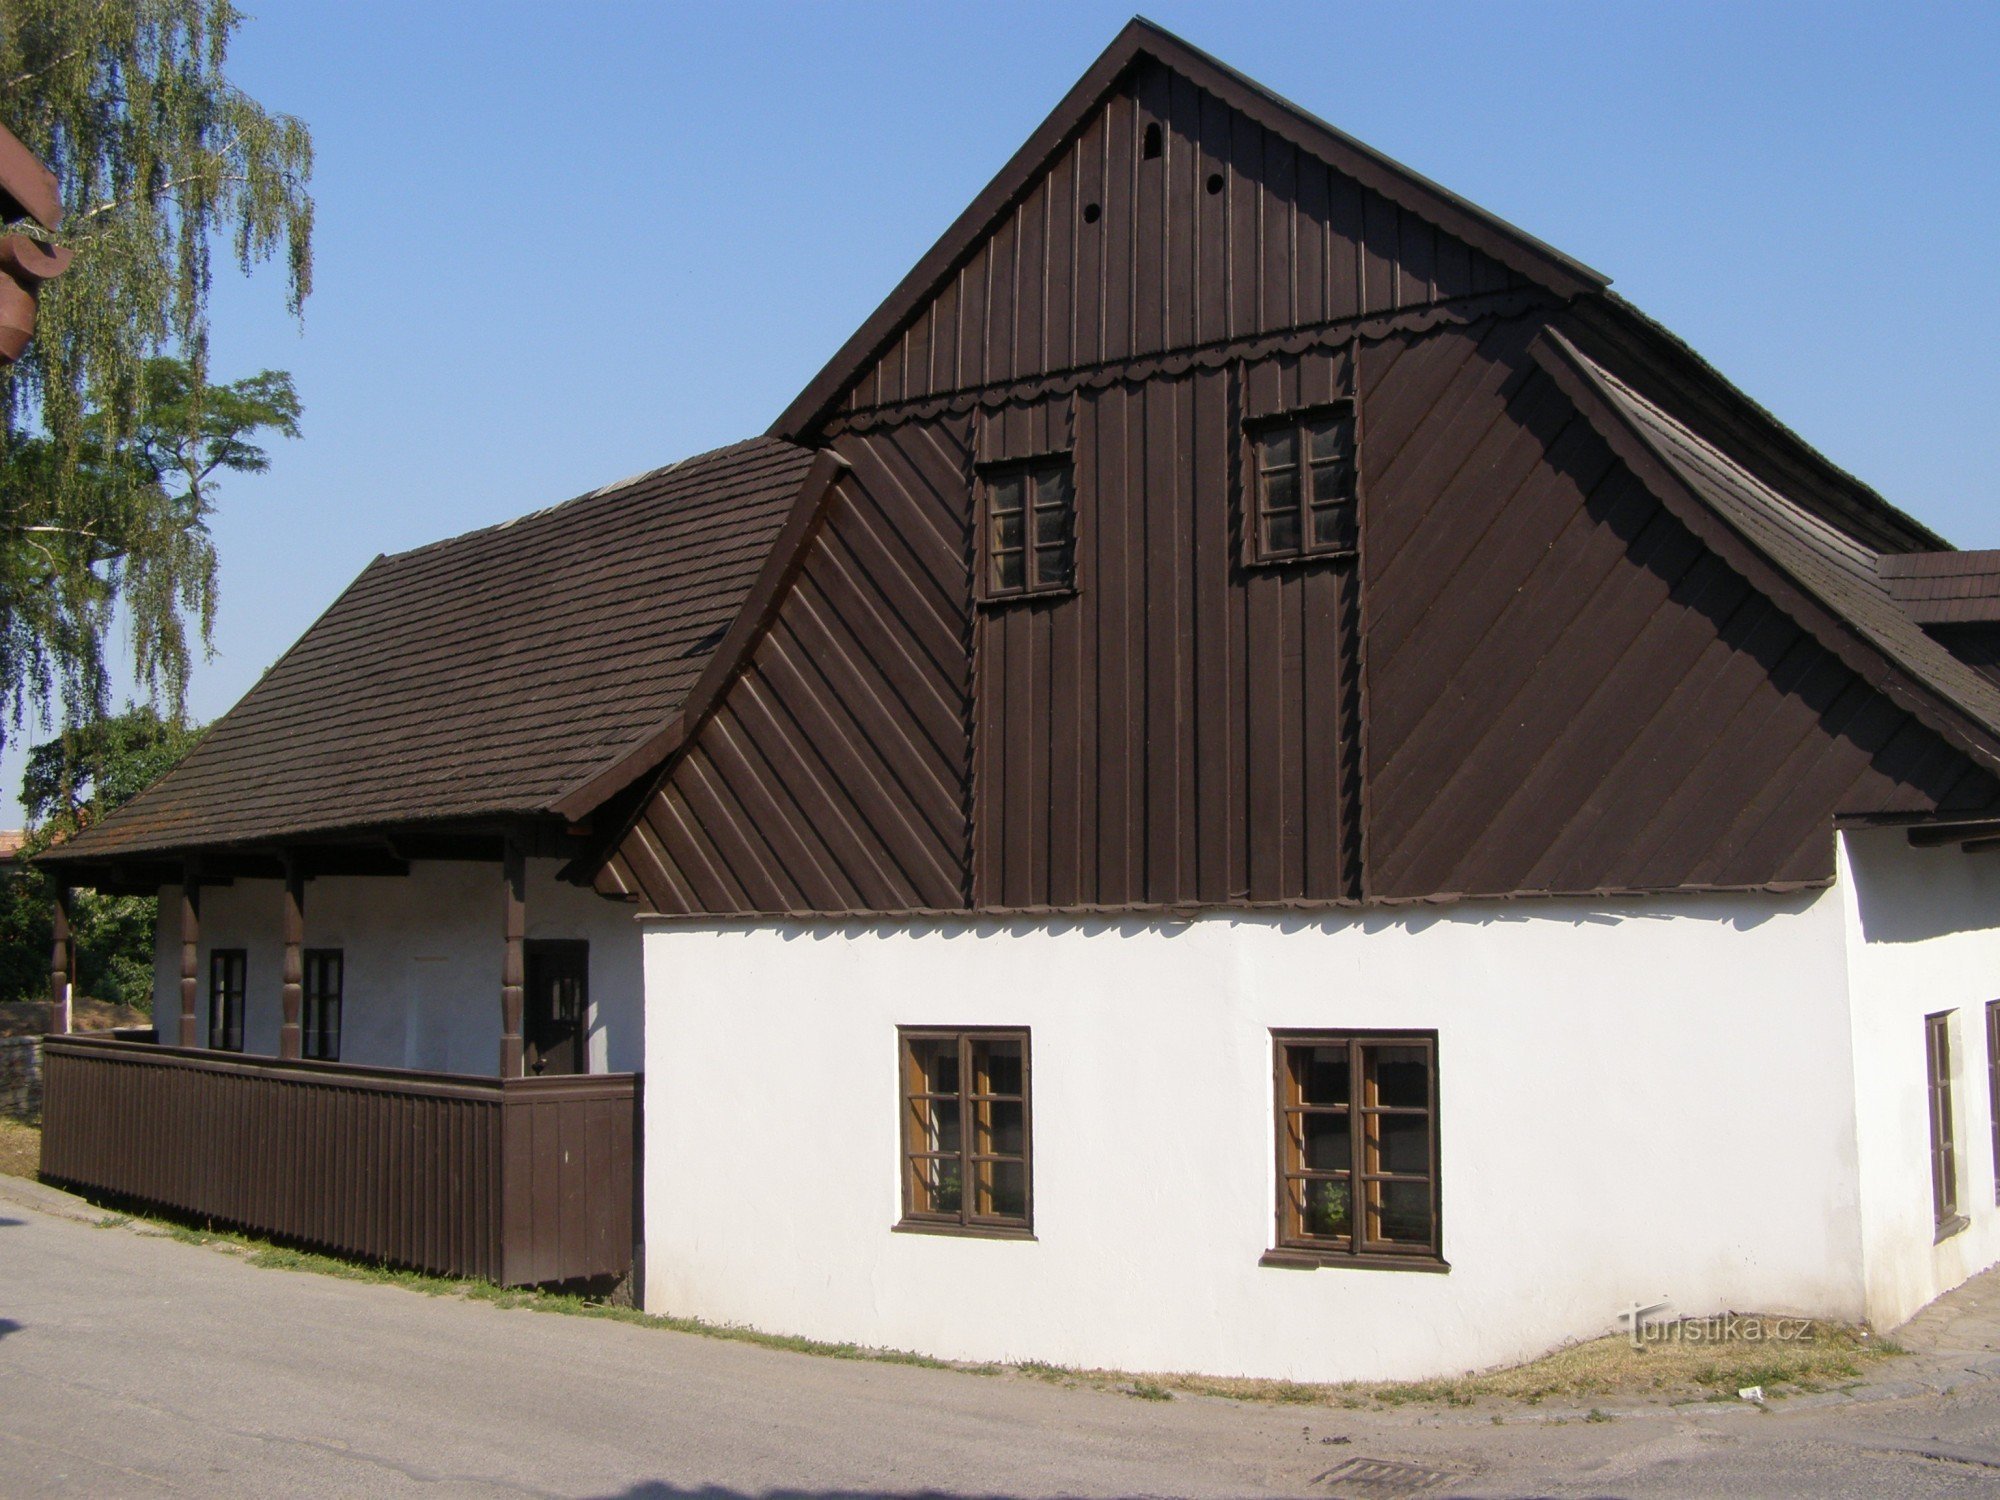 Dobruška - le lieu de naissance de FLVěk (Heka)